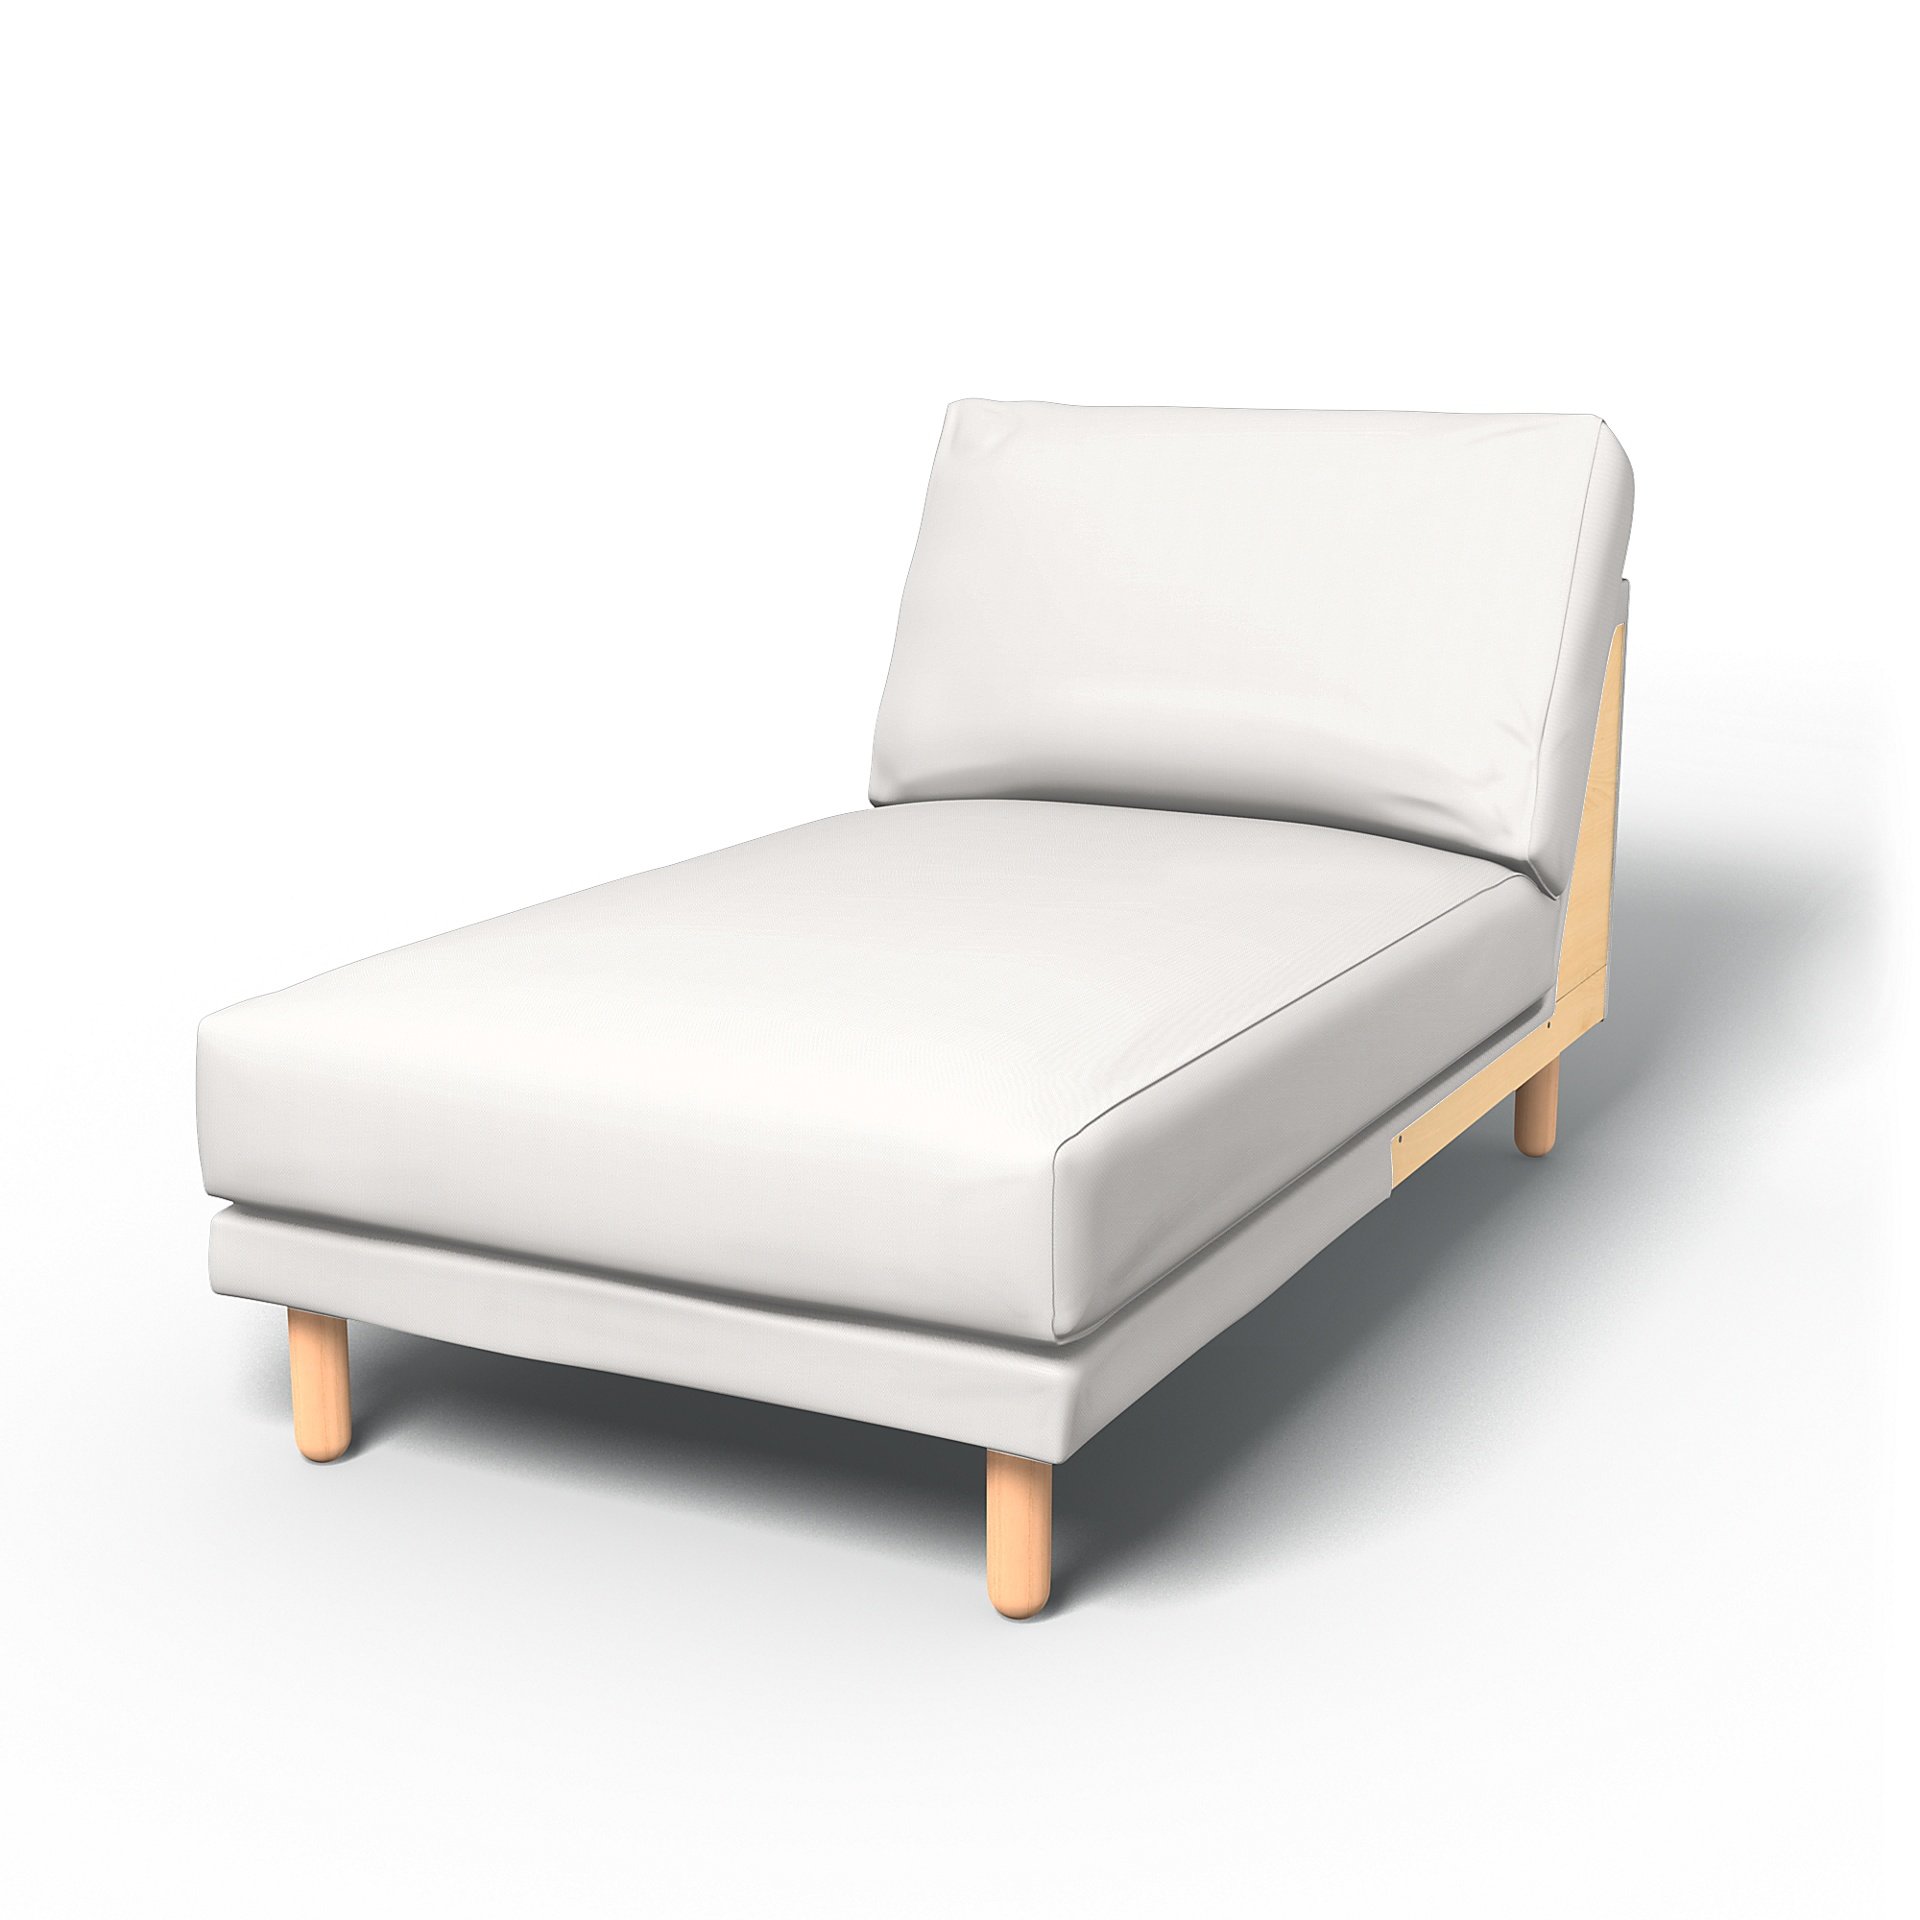 IKEA - Norsborg Chaise Longue Add-on Unit Cover, Soft White, Linen - Bemz